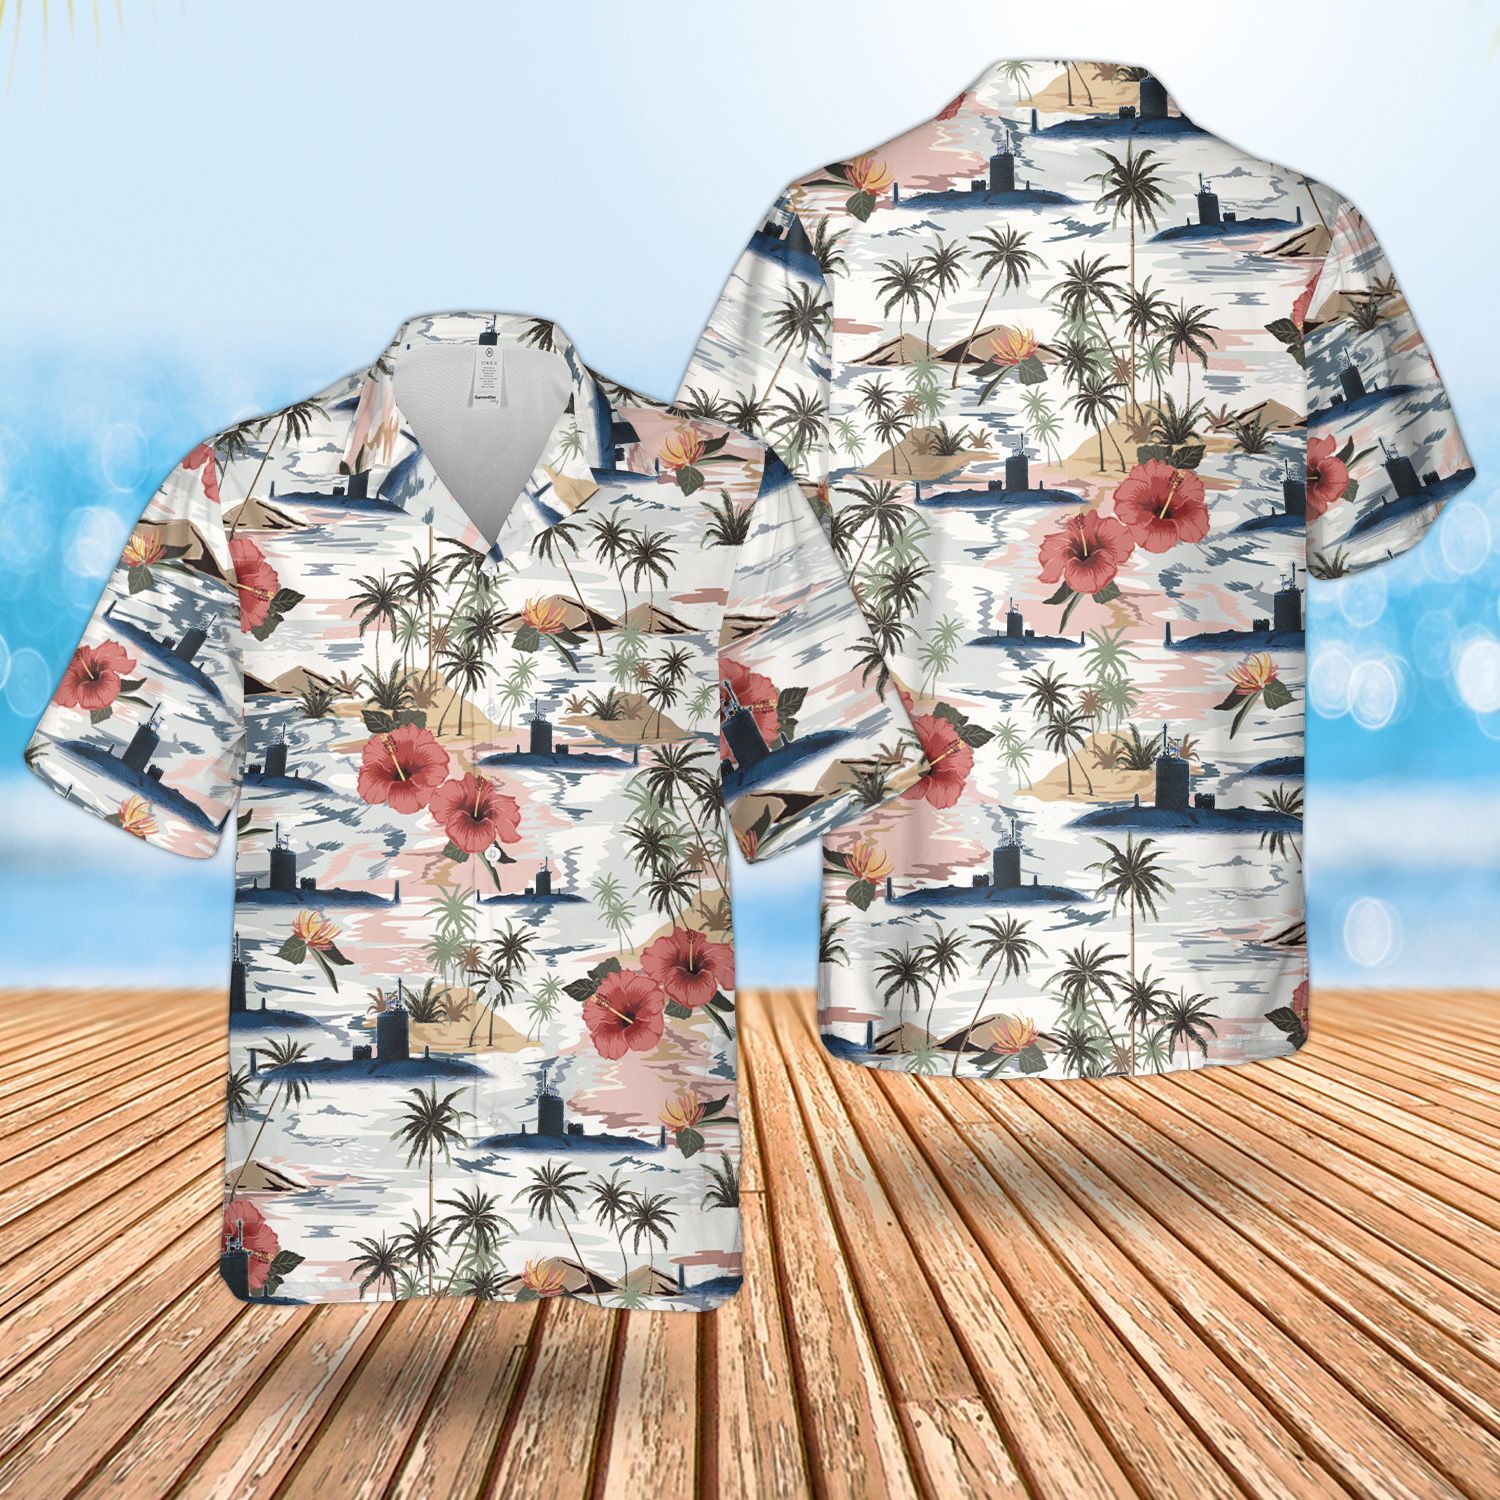 Enjoy your summer with top cool hawaiian shirt below 253